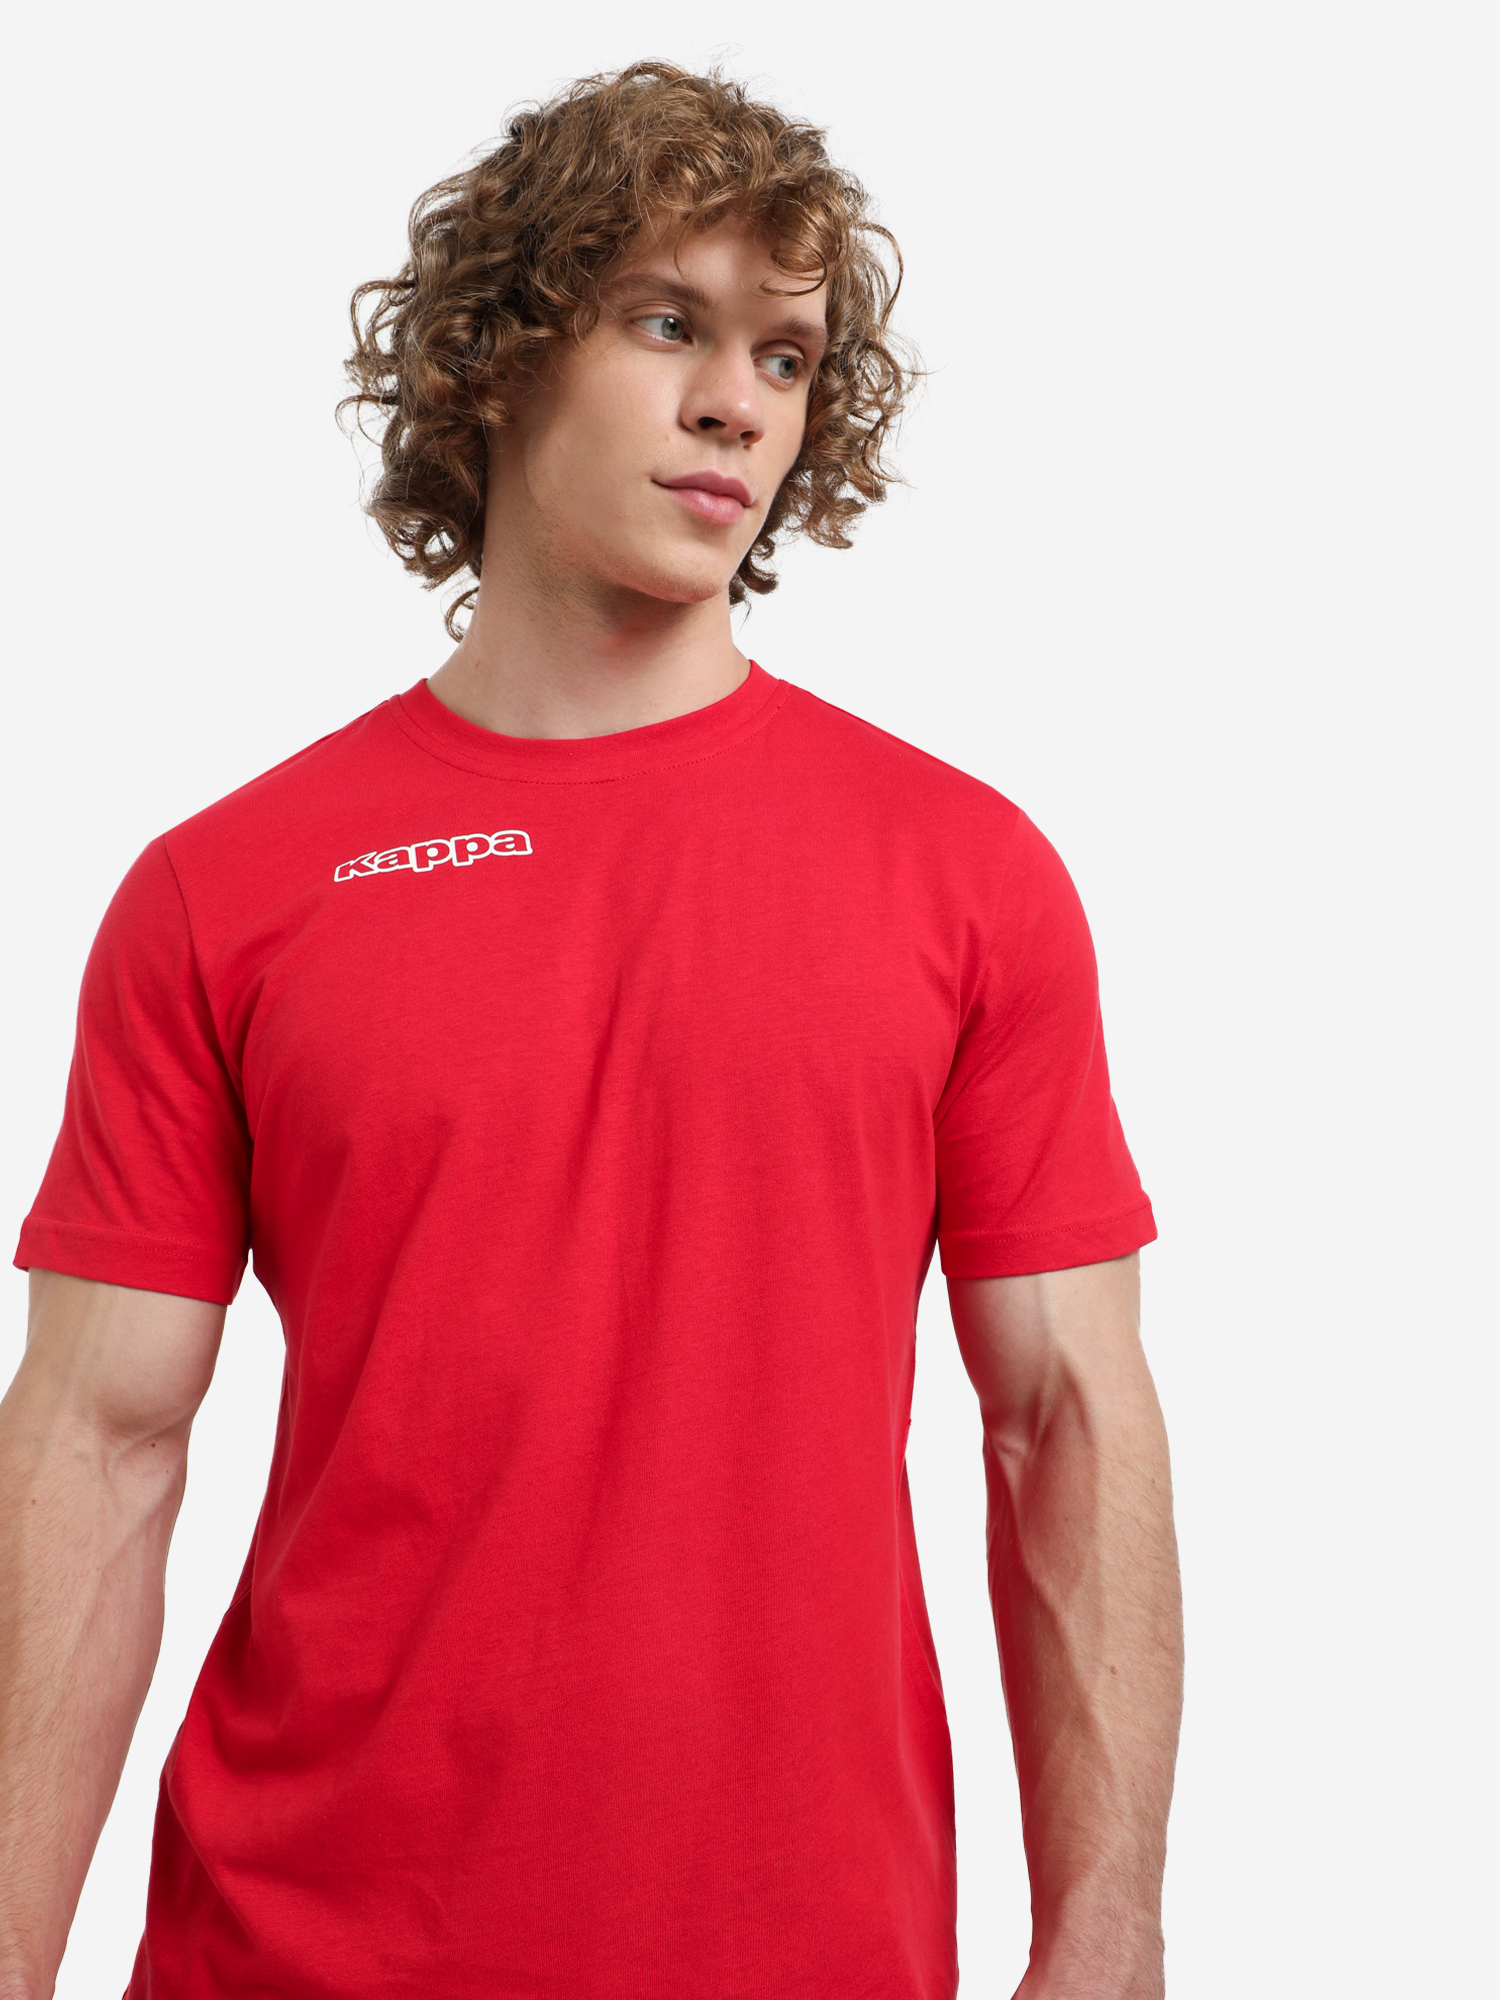 Футболка мужская Kappa, Красный футболка мужская kappa красный